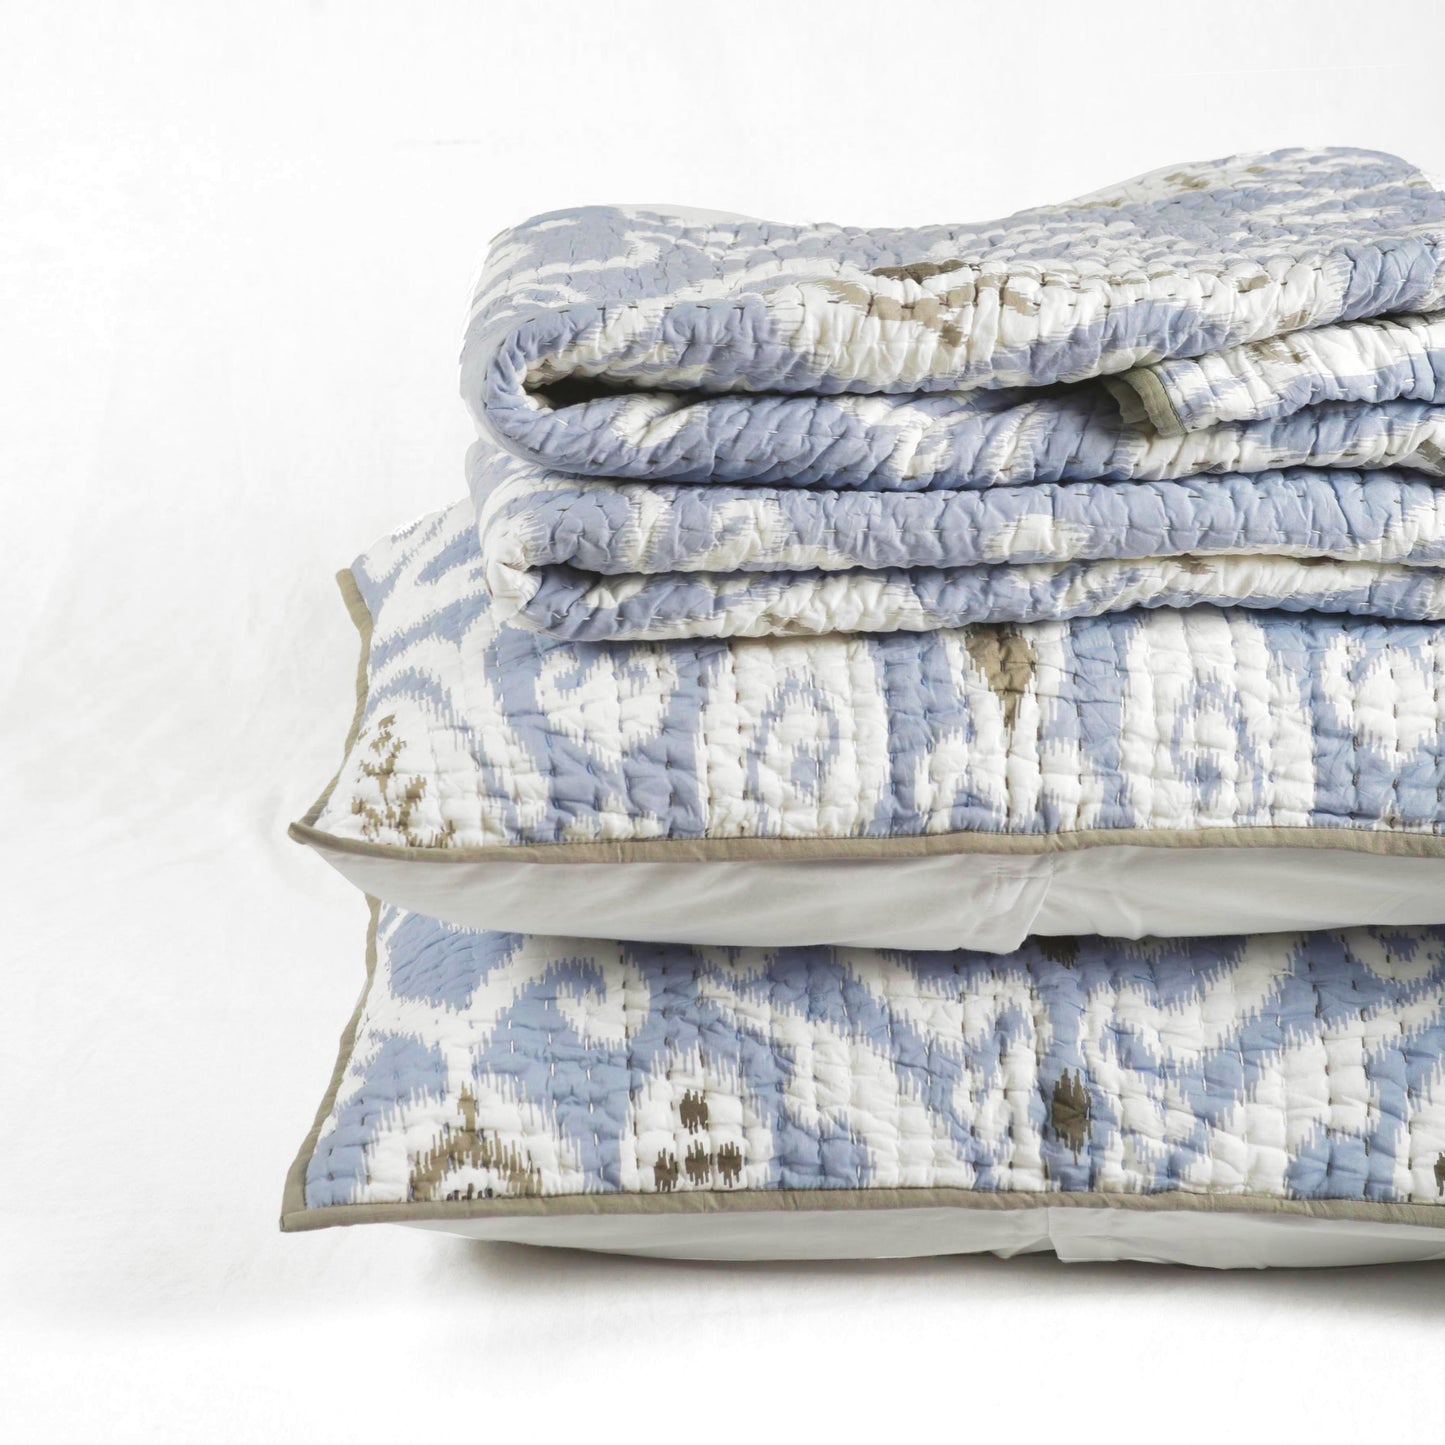 BLUE IKAT print Kantha quilt - stripe pattern quilting - Quilt set / Quilt / Pillow case available